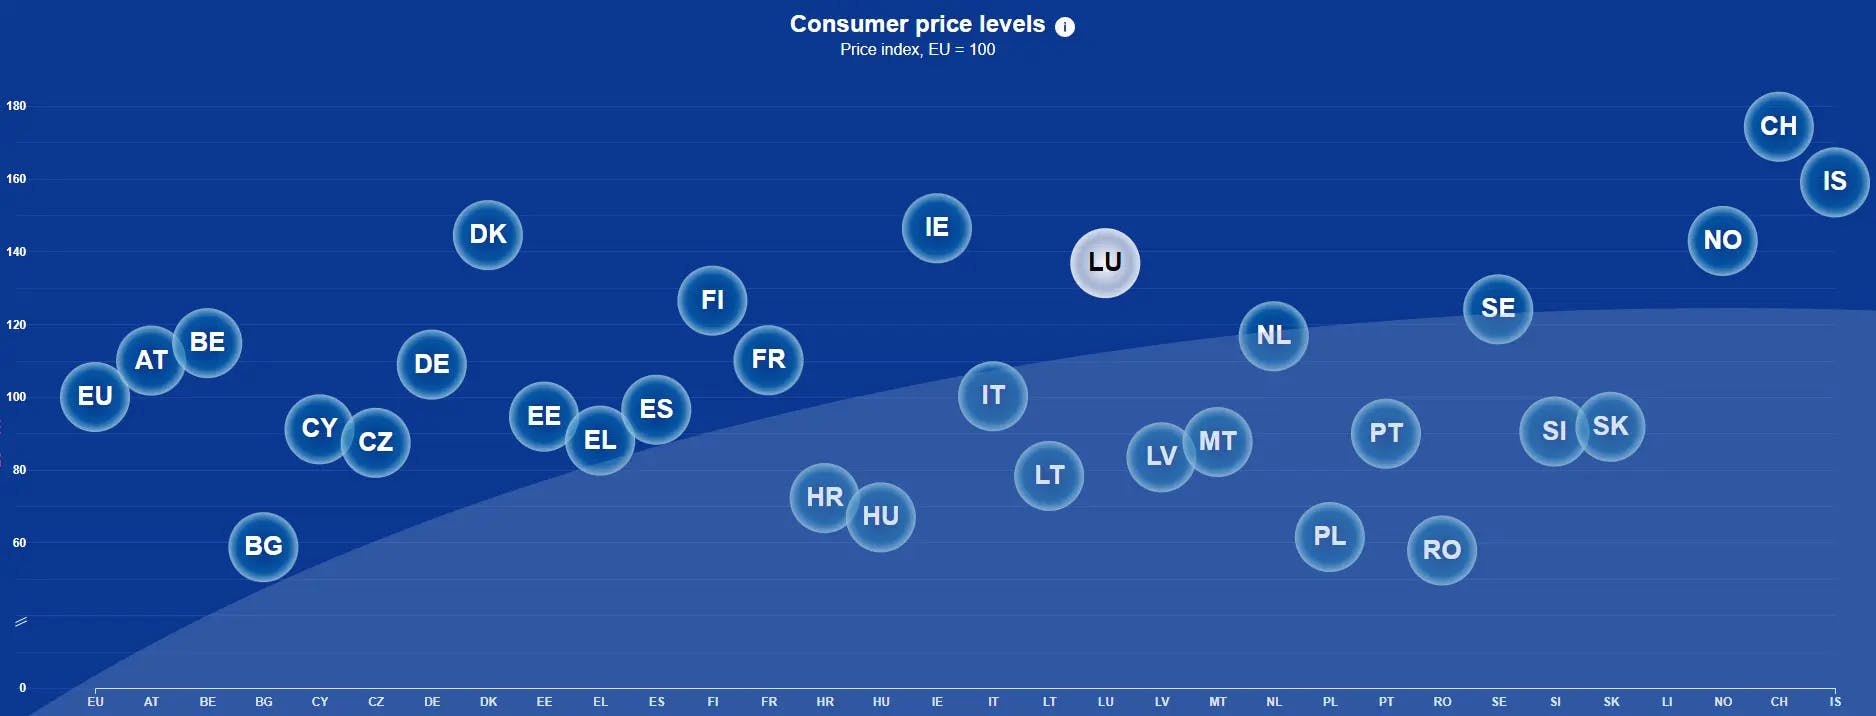 Consumer price levels in EU